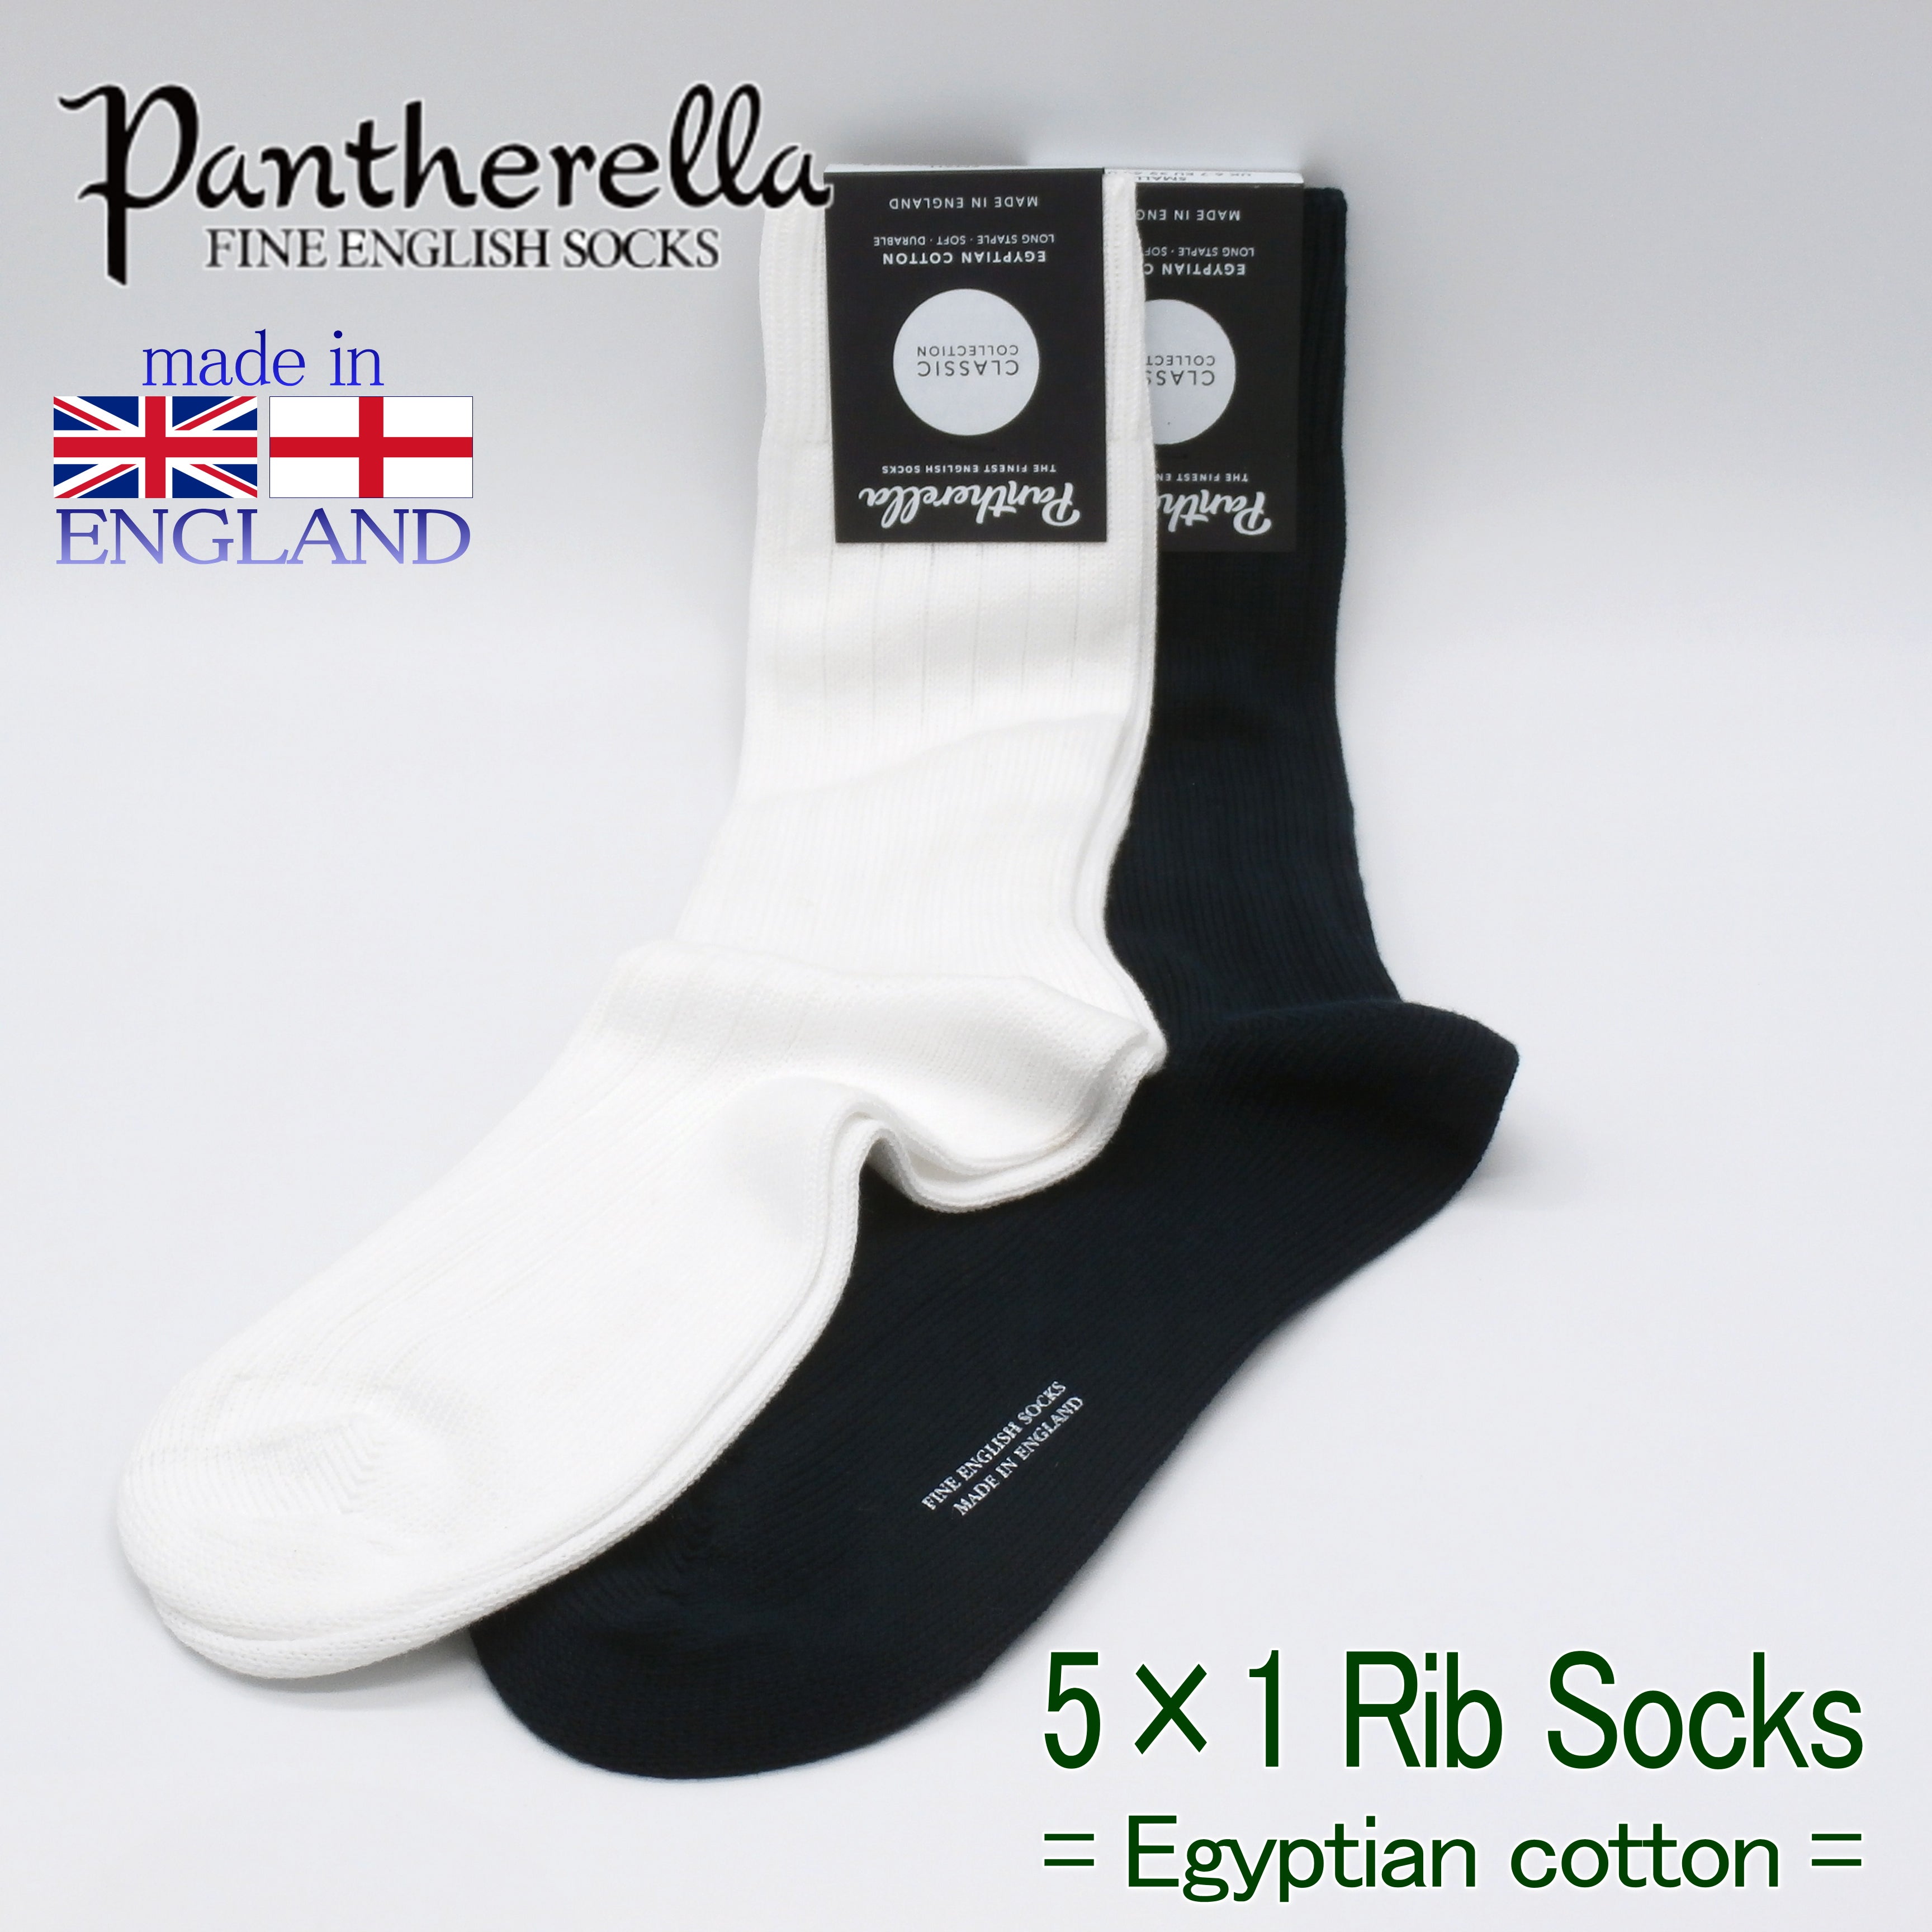 5 x 1 Rib Socks = Egyptian cotton =